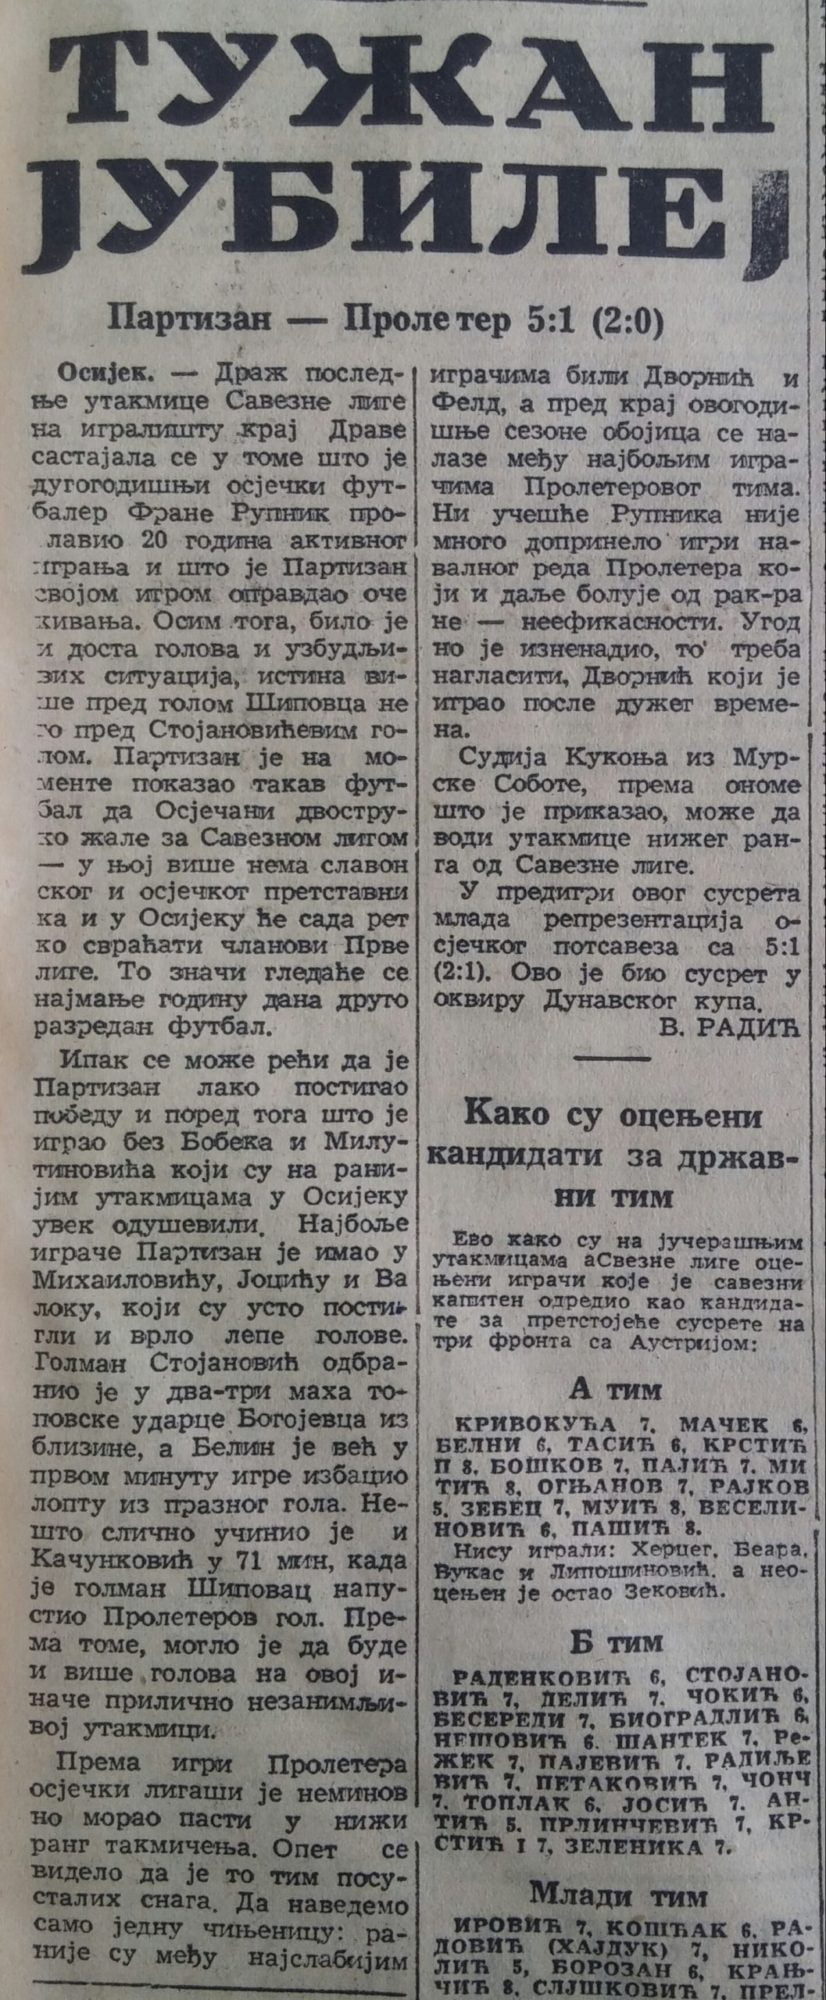 SEZONA 1955/56 25.kolo-03.06.1956.-proleter-osijek-partizan-1-5-scaled